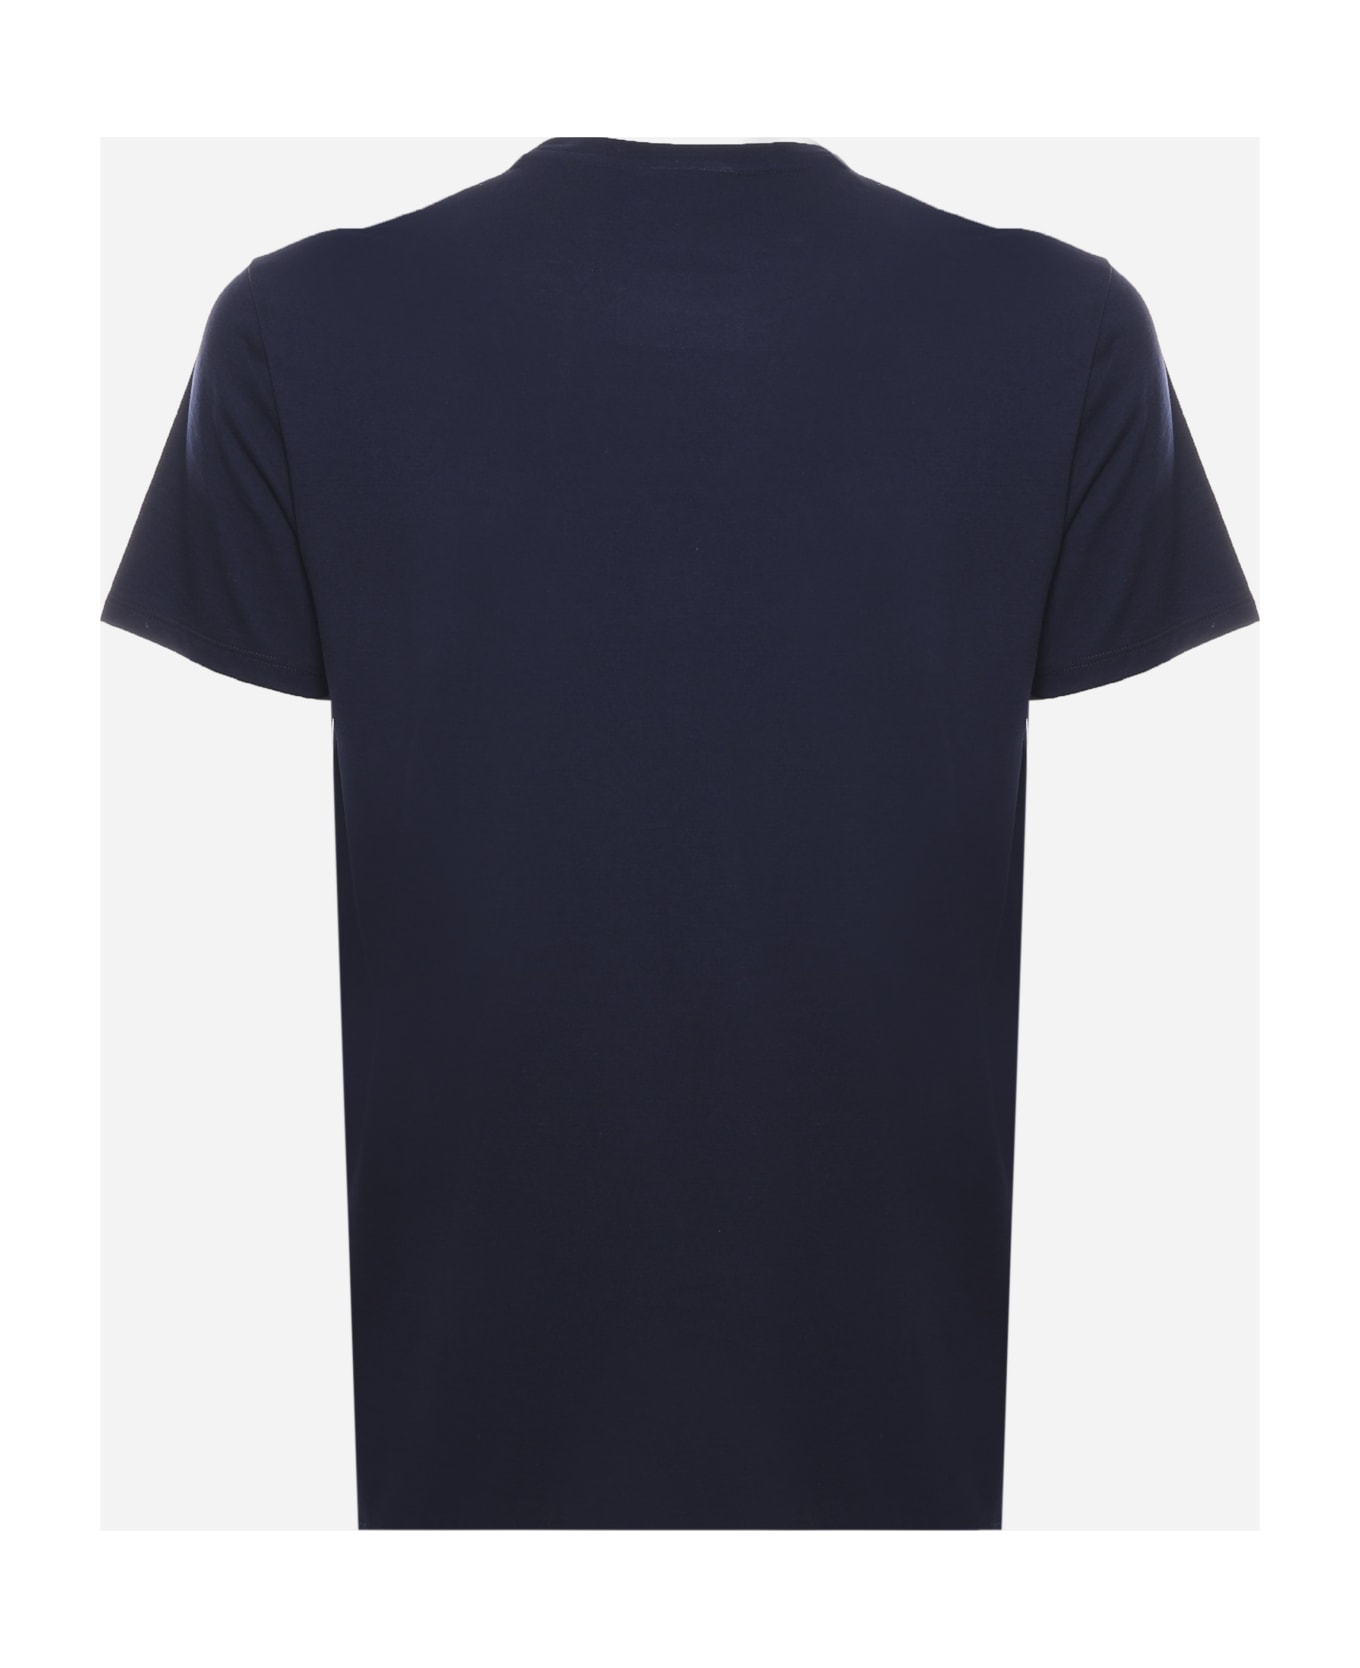 Lacoste Navy Blue Cotton Jersey T-shirt